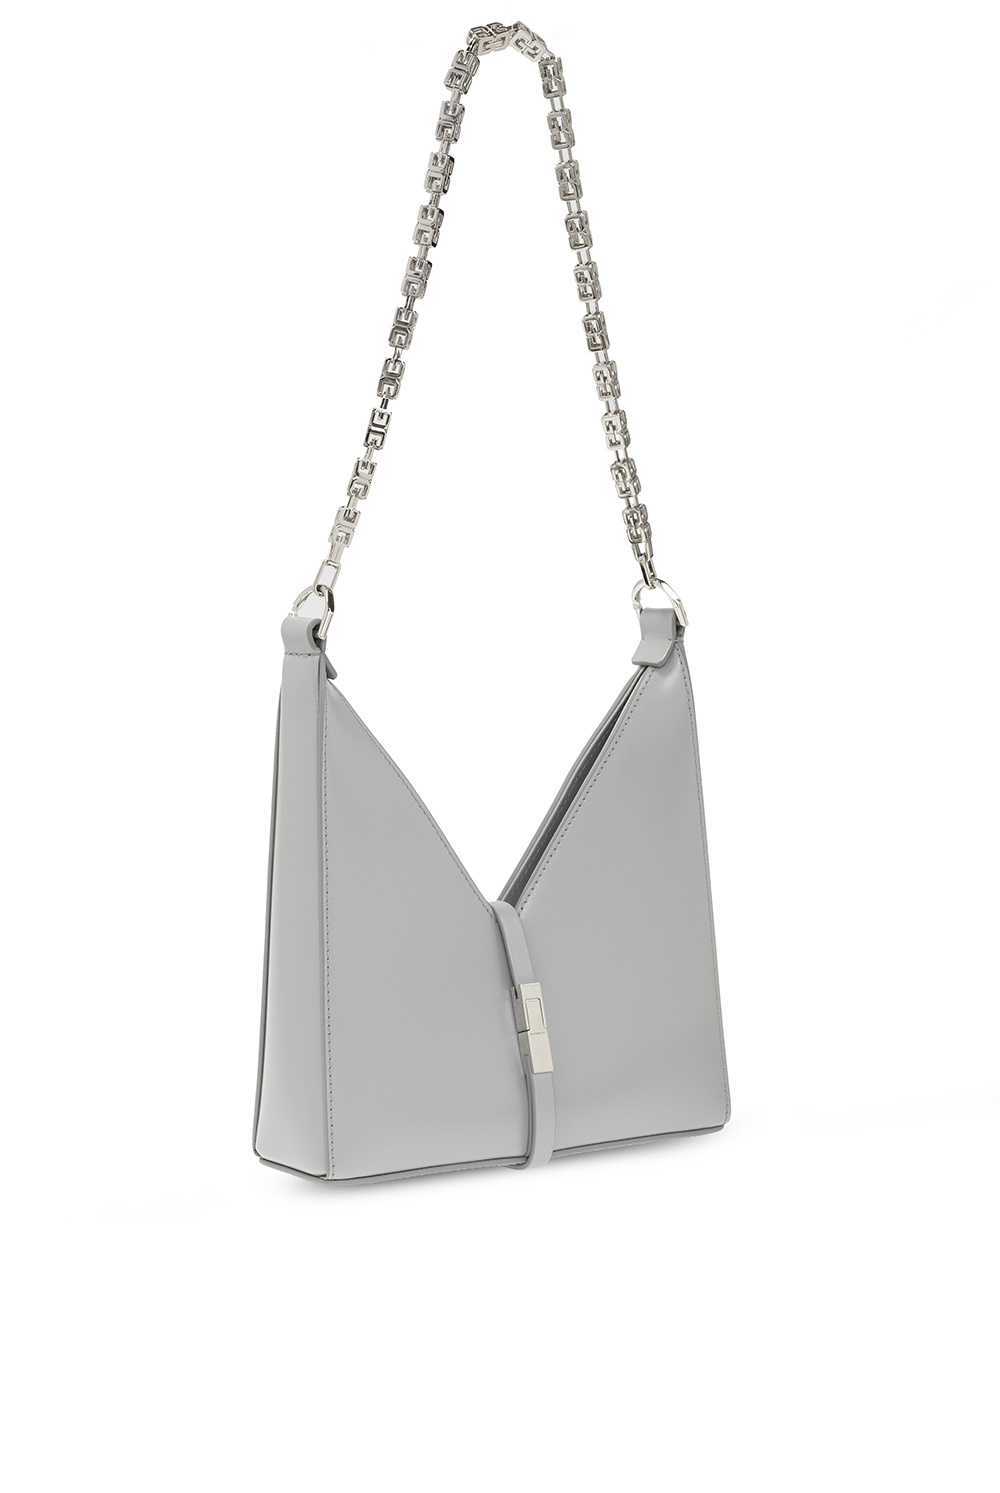 Givenchy ‘Cut Out Mini’ shoulder bag